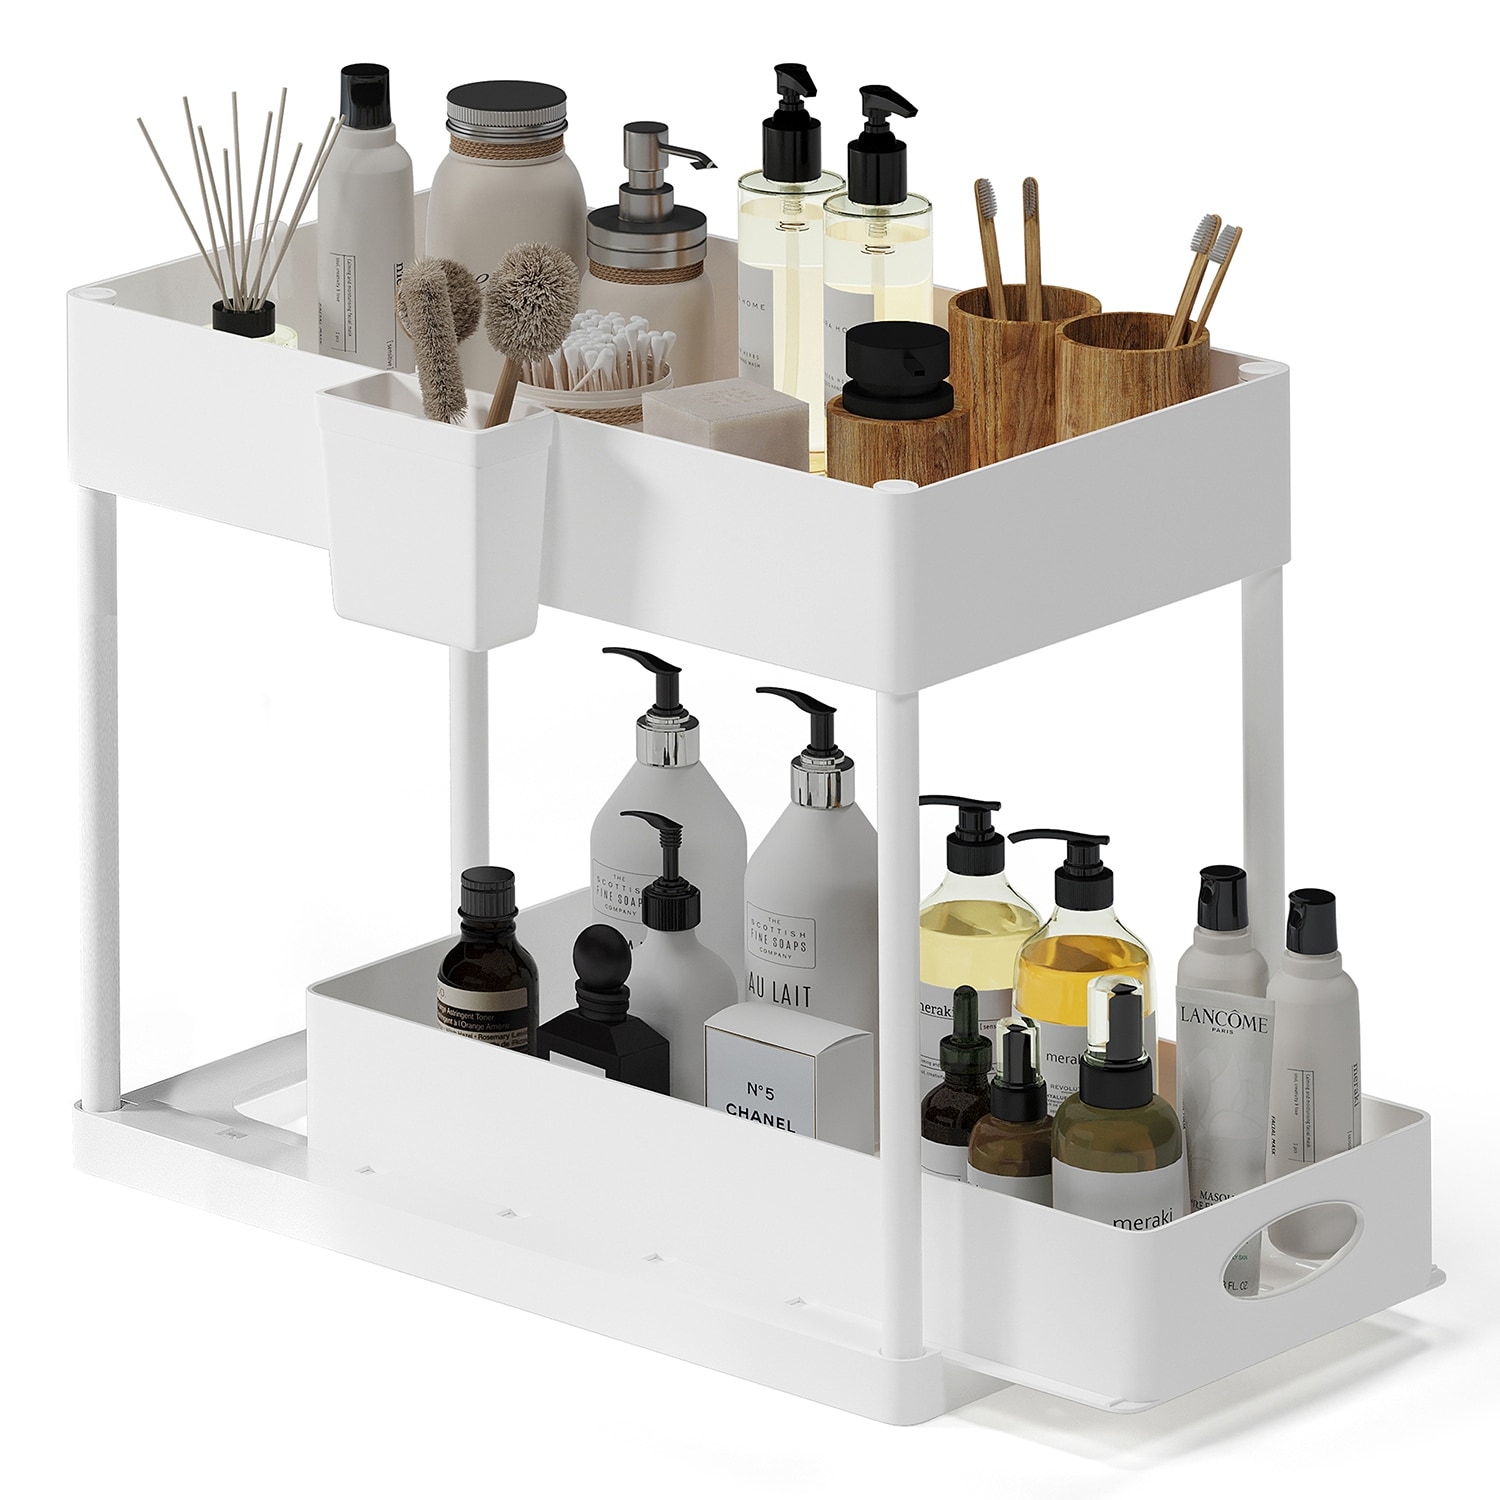 https://ak1.ostkcdn.com/images/products/is/images/direct/8cc09b0c6ca1dd4ff238a60fd576df7db72f4d27/StorageBud-2-Tier-Under-Kitchen-Sink-Organizer-with-Sliding-Drawer-Bathroom-Cabinet-Organizer-with-Utility-Hooks-and-Side-Caddy.jpg